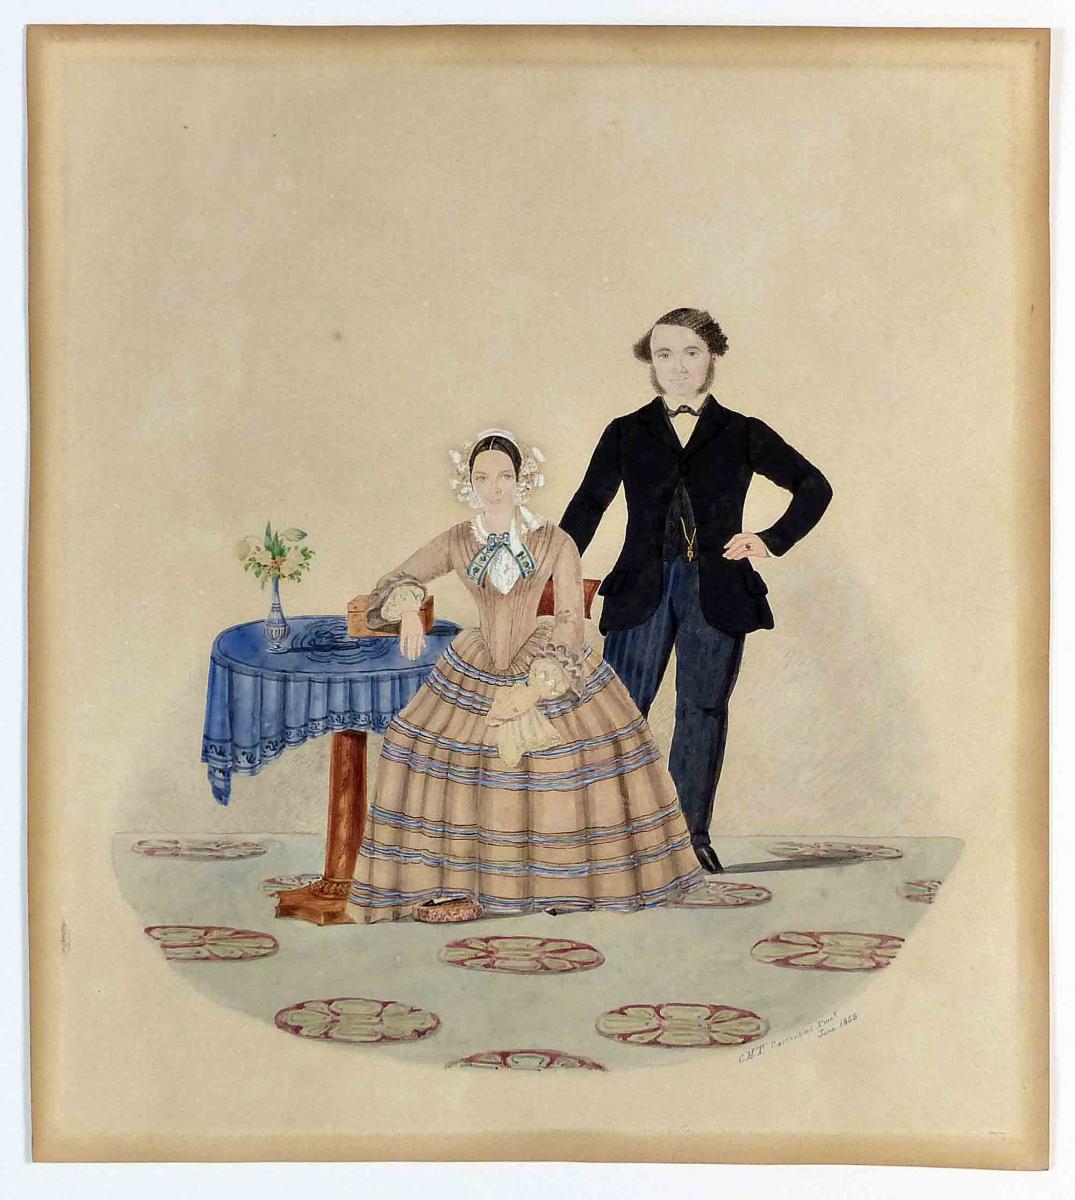 Costantini portrait of Adam and Caroline Newitt. Image:Stephanie McDonald